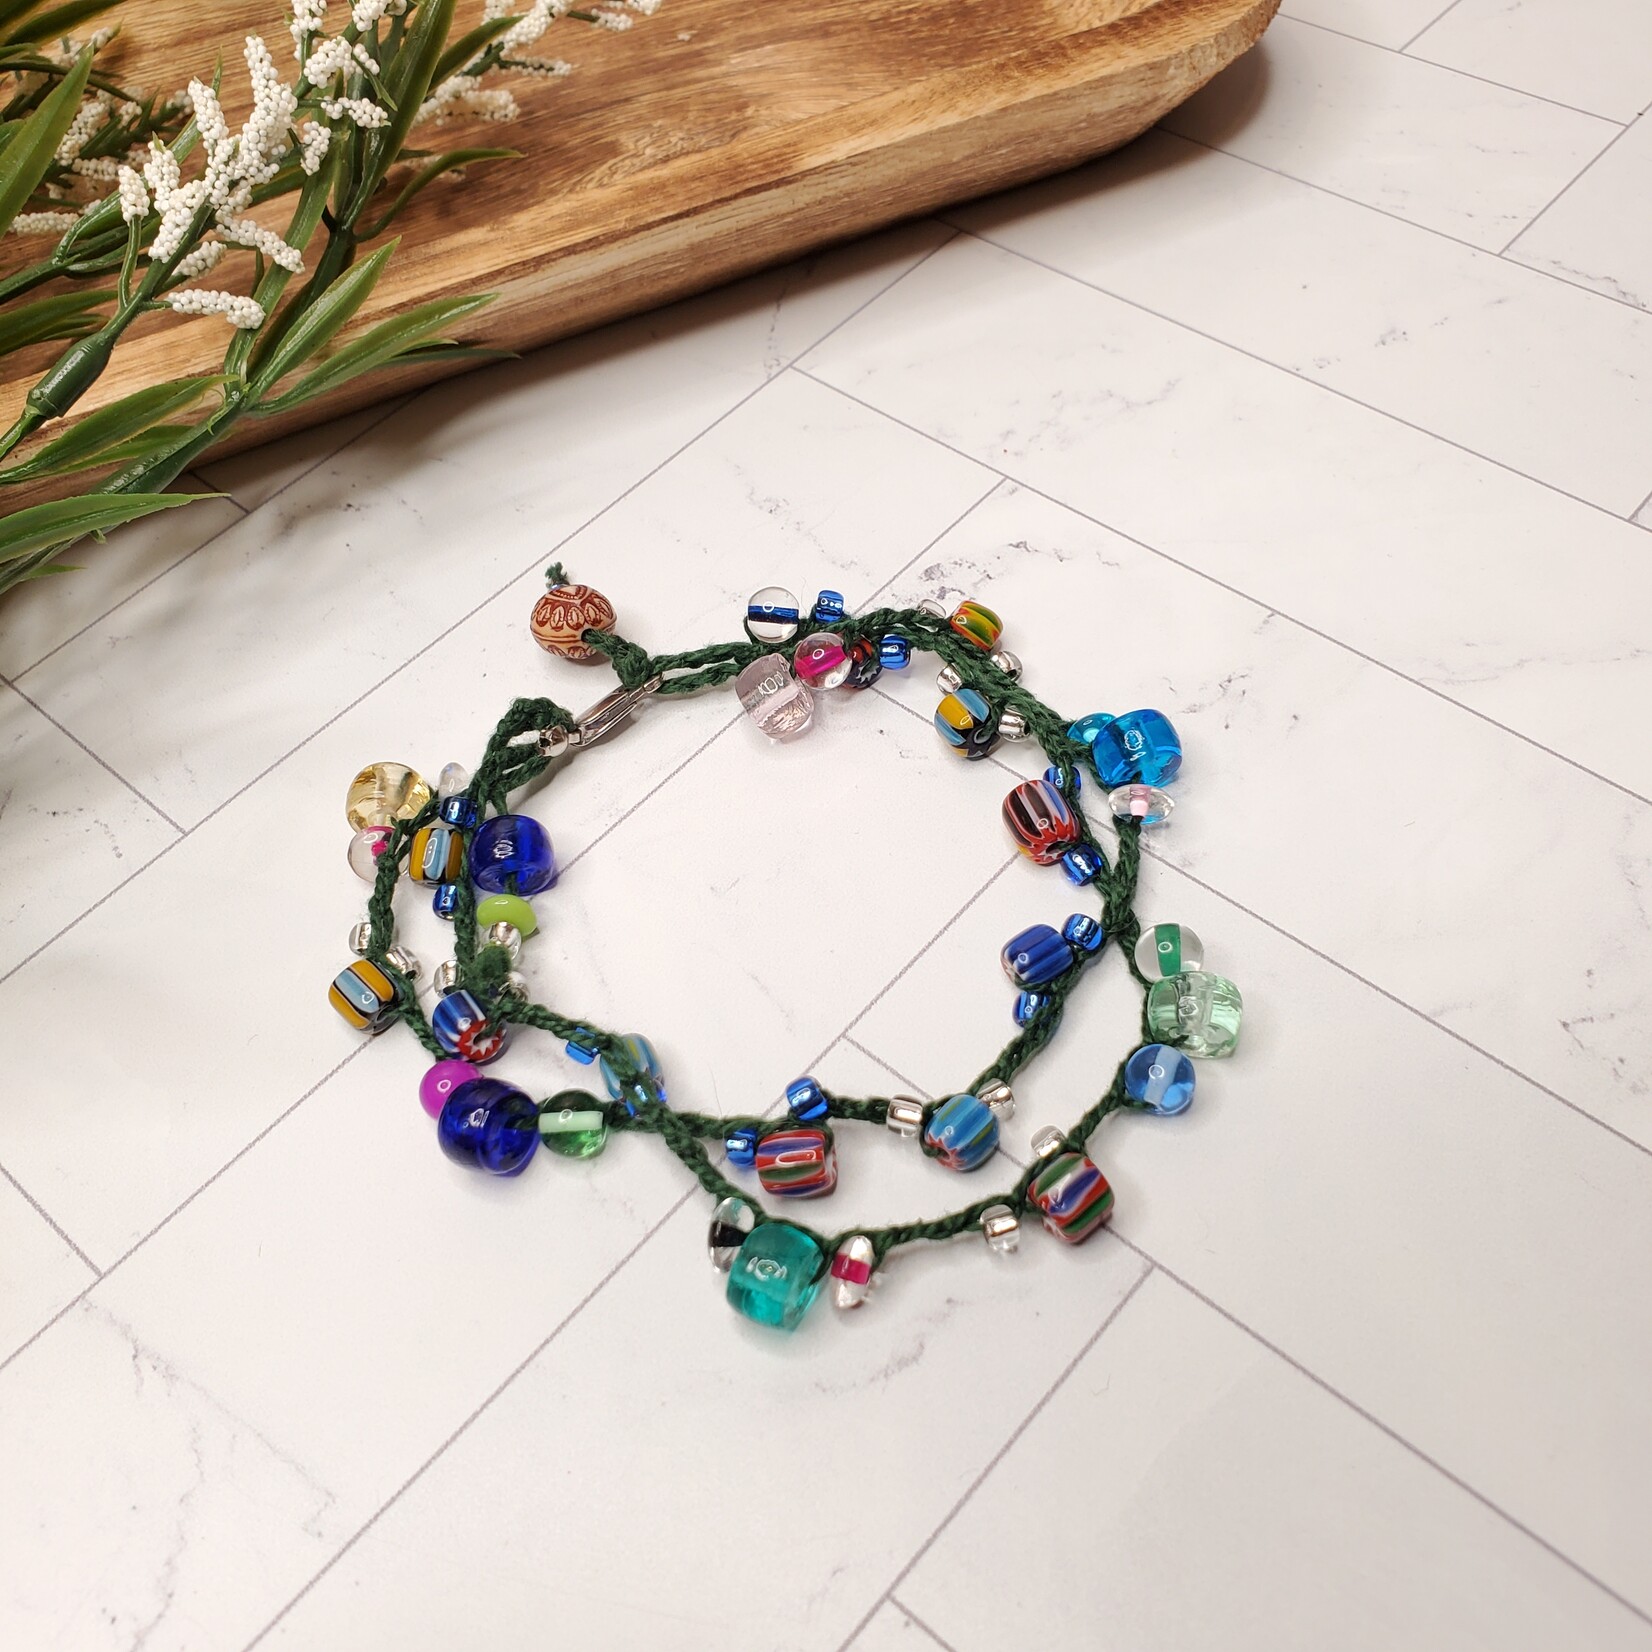 Crescent Moon Jewelry of the Sierras Bead Crochet Double Bracelet - Green & Multi-Colored - 11"